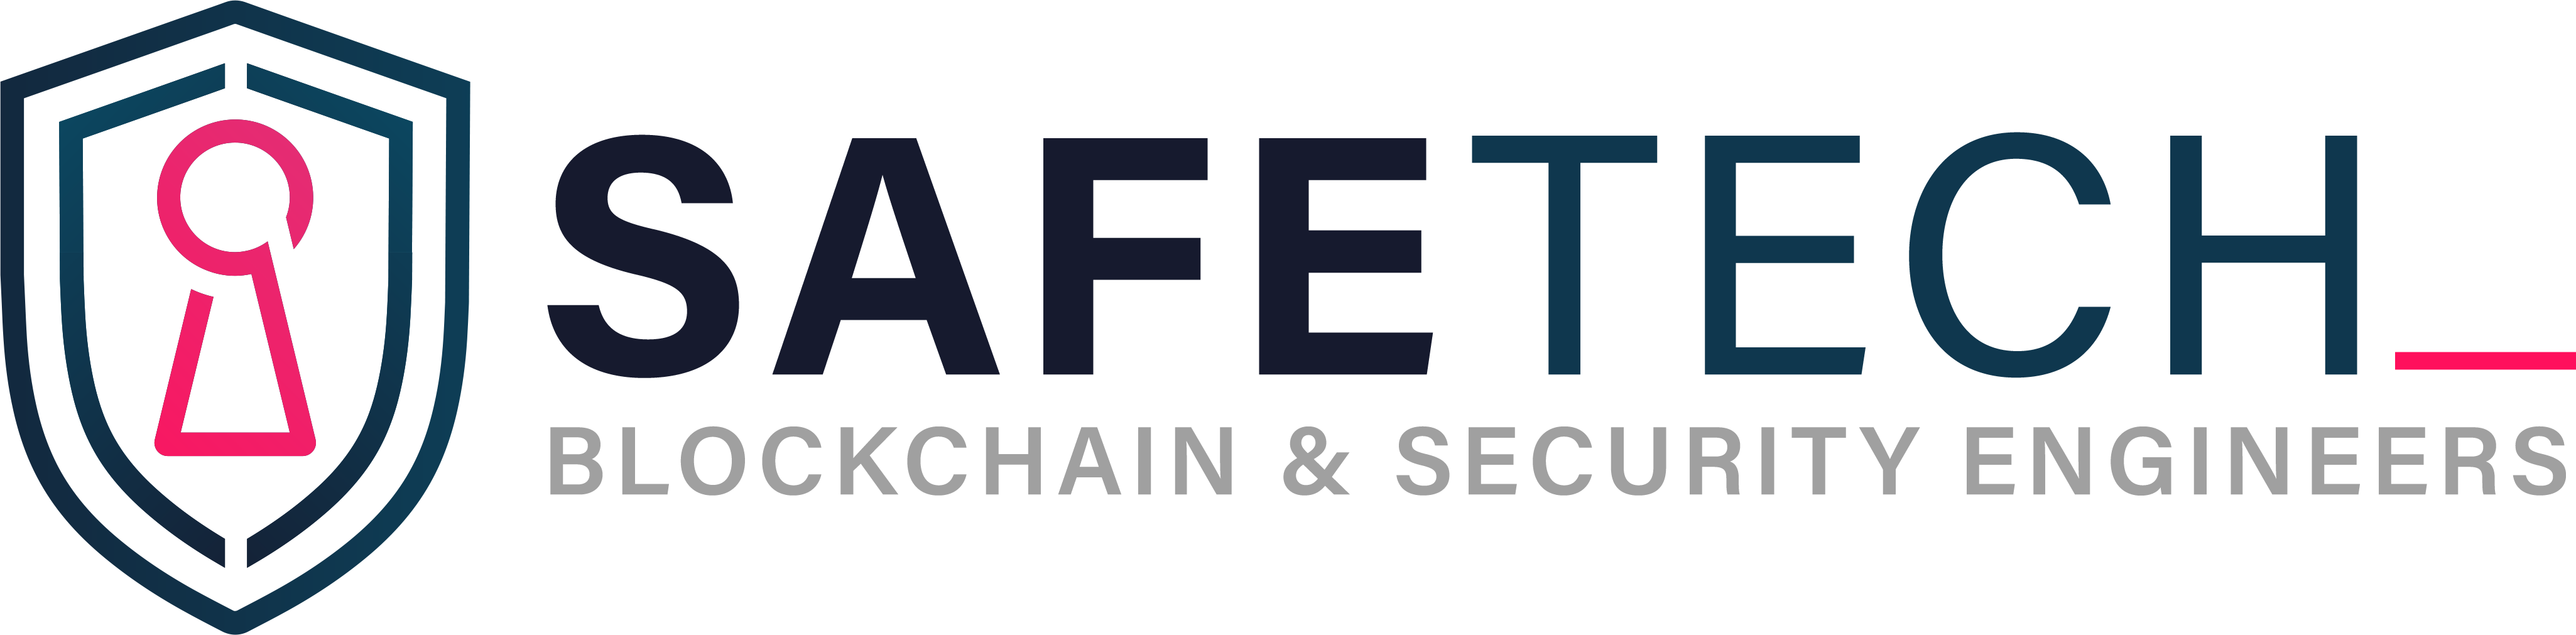 SafeTech Labs